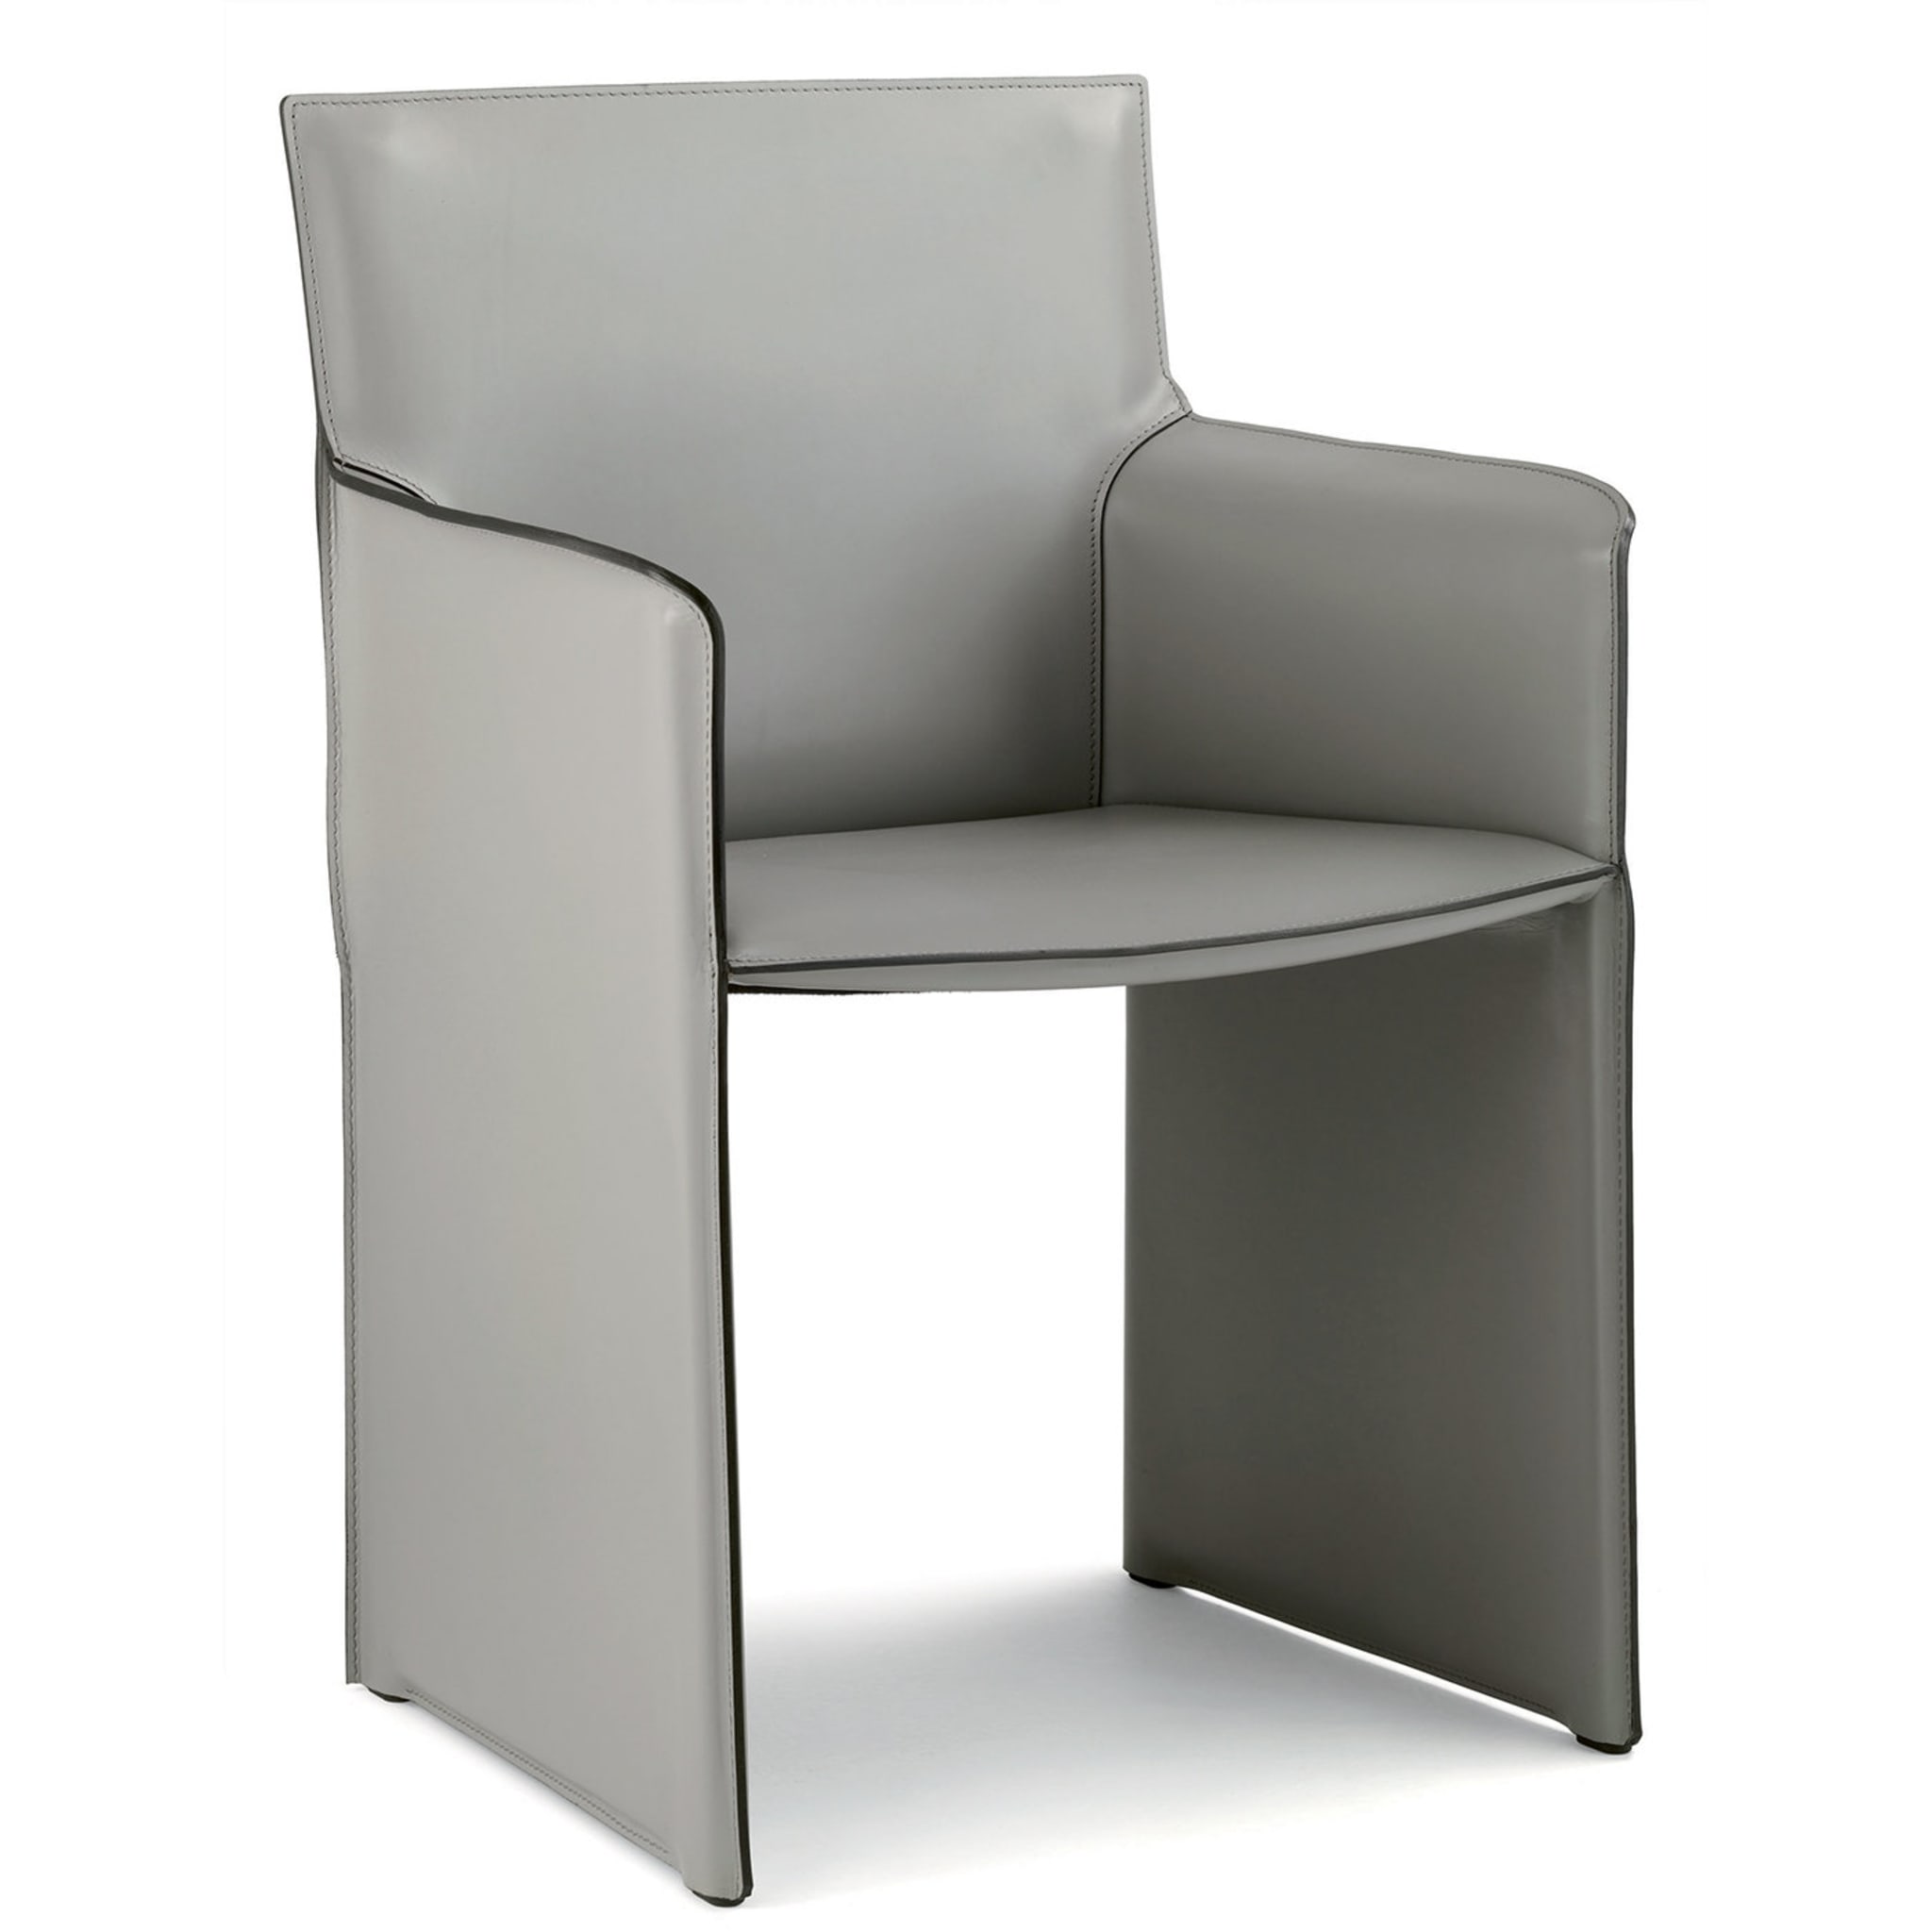 Pasqualina Chair by Grassi&Bianchi - Alternative view 1